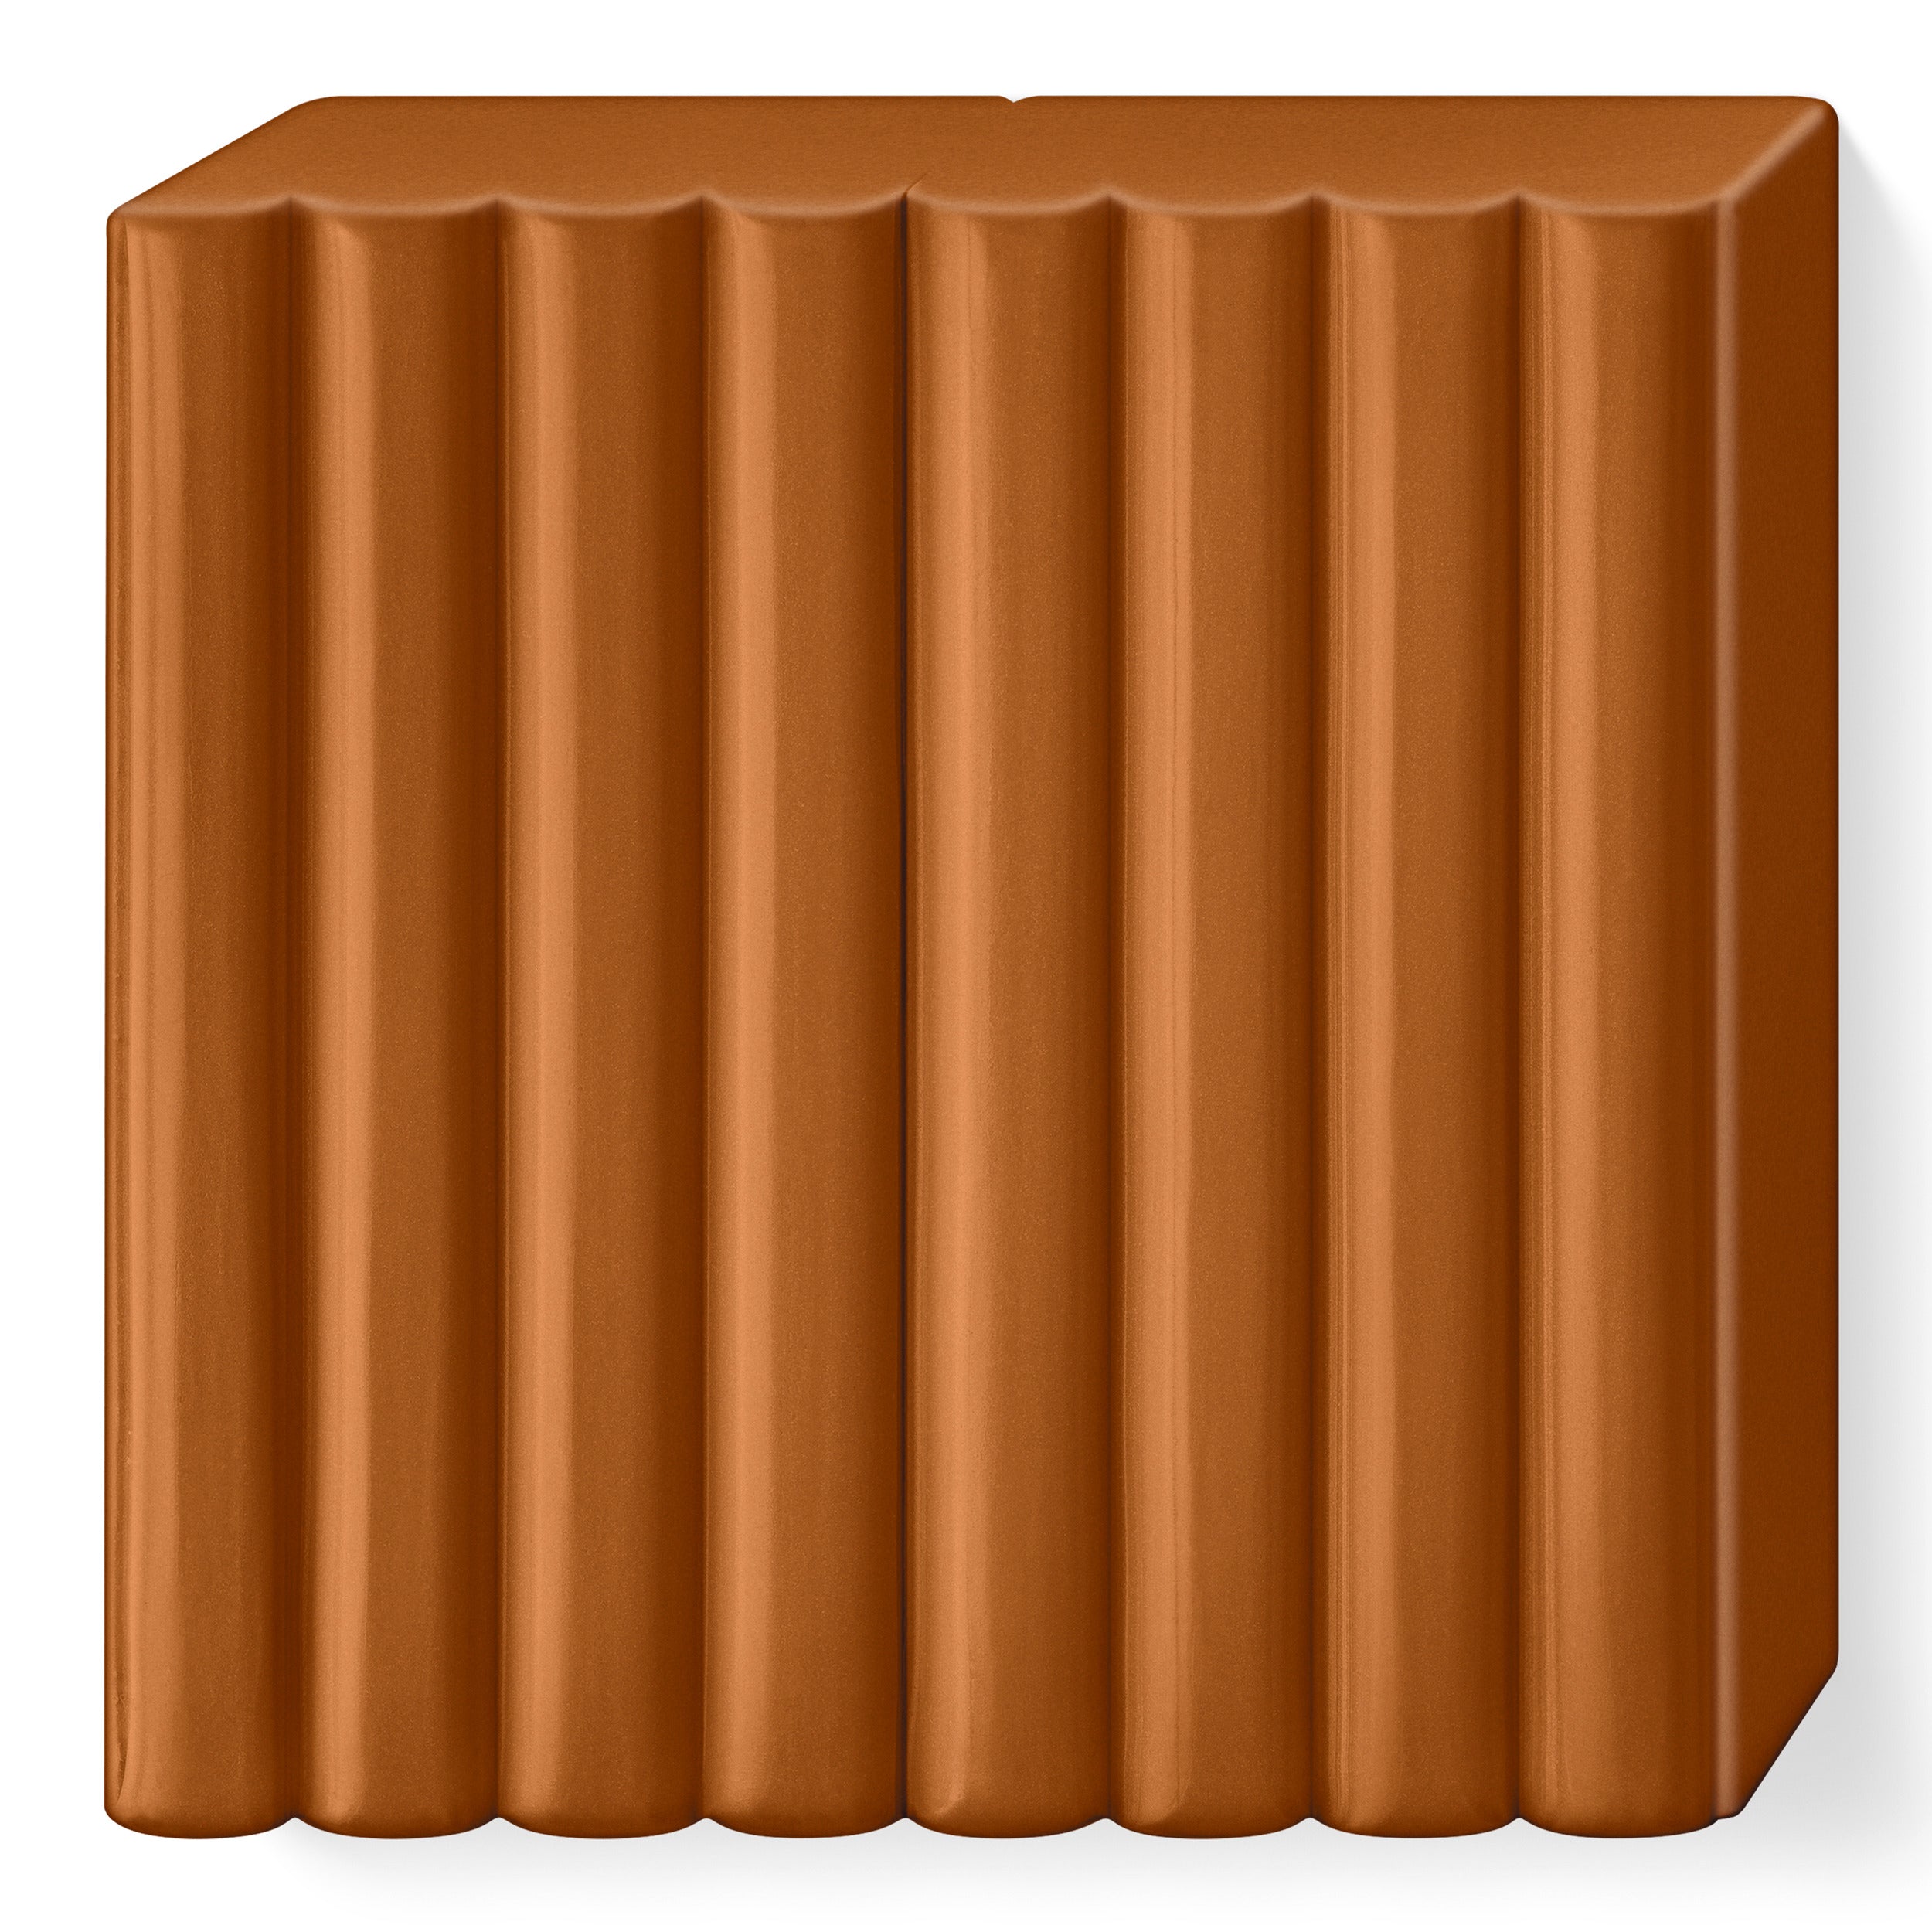 Fimo Soft Polymer Clay Standard Block 57g (2oz) - Caramel